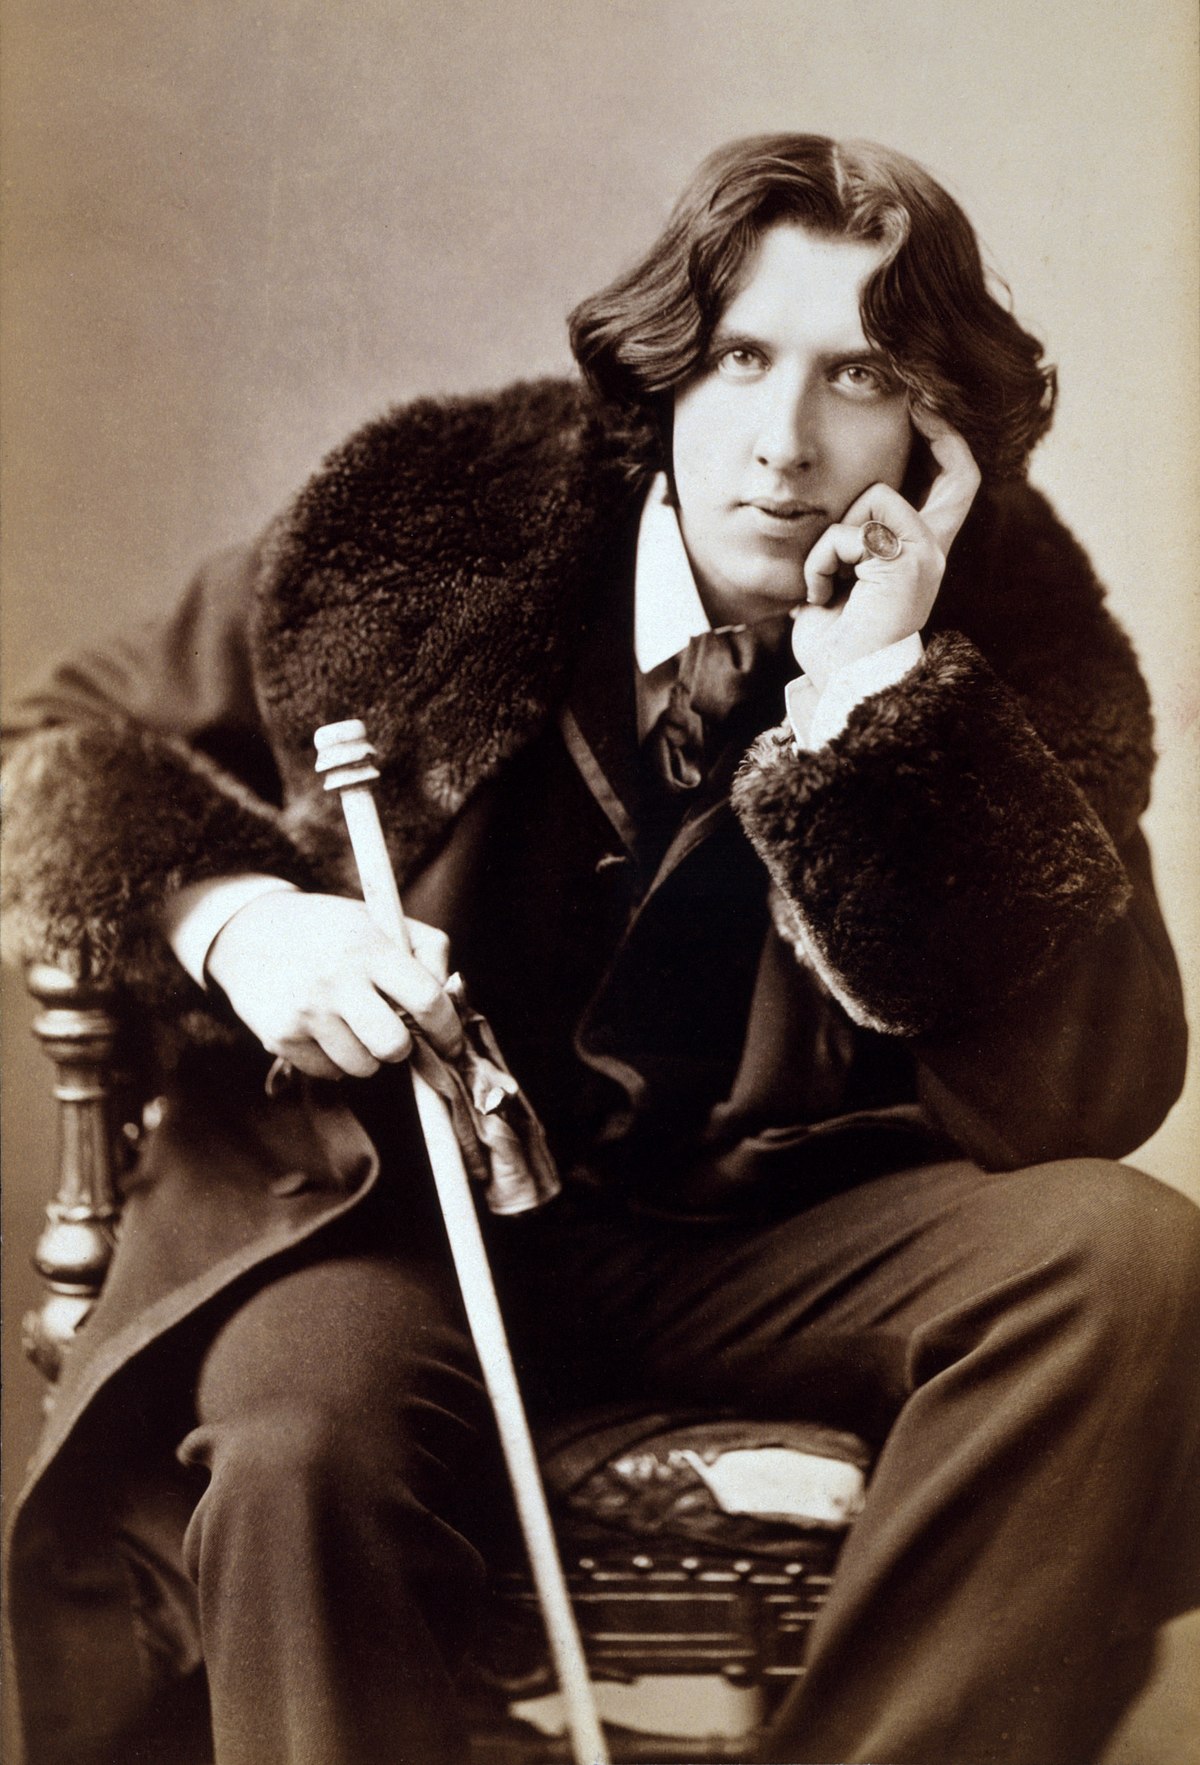 Photograph by Napoleon Sarony, c. 1882